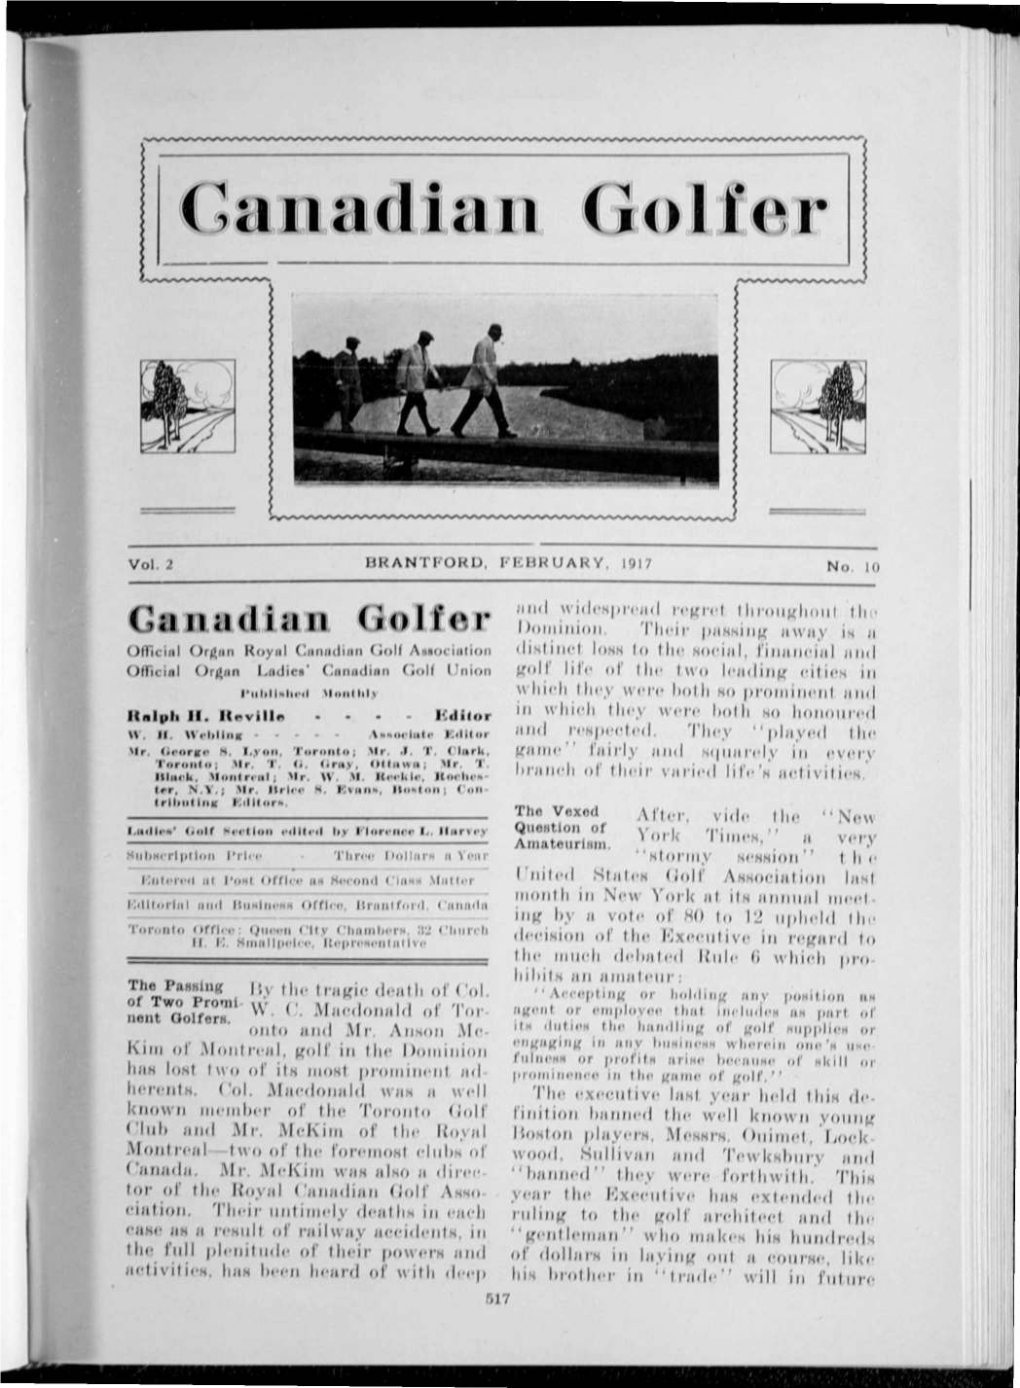 Canadian Golfer, February, 1917